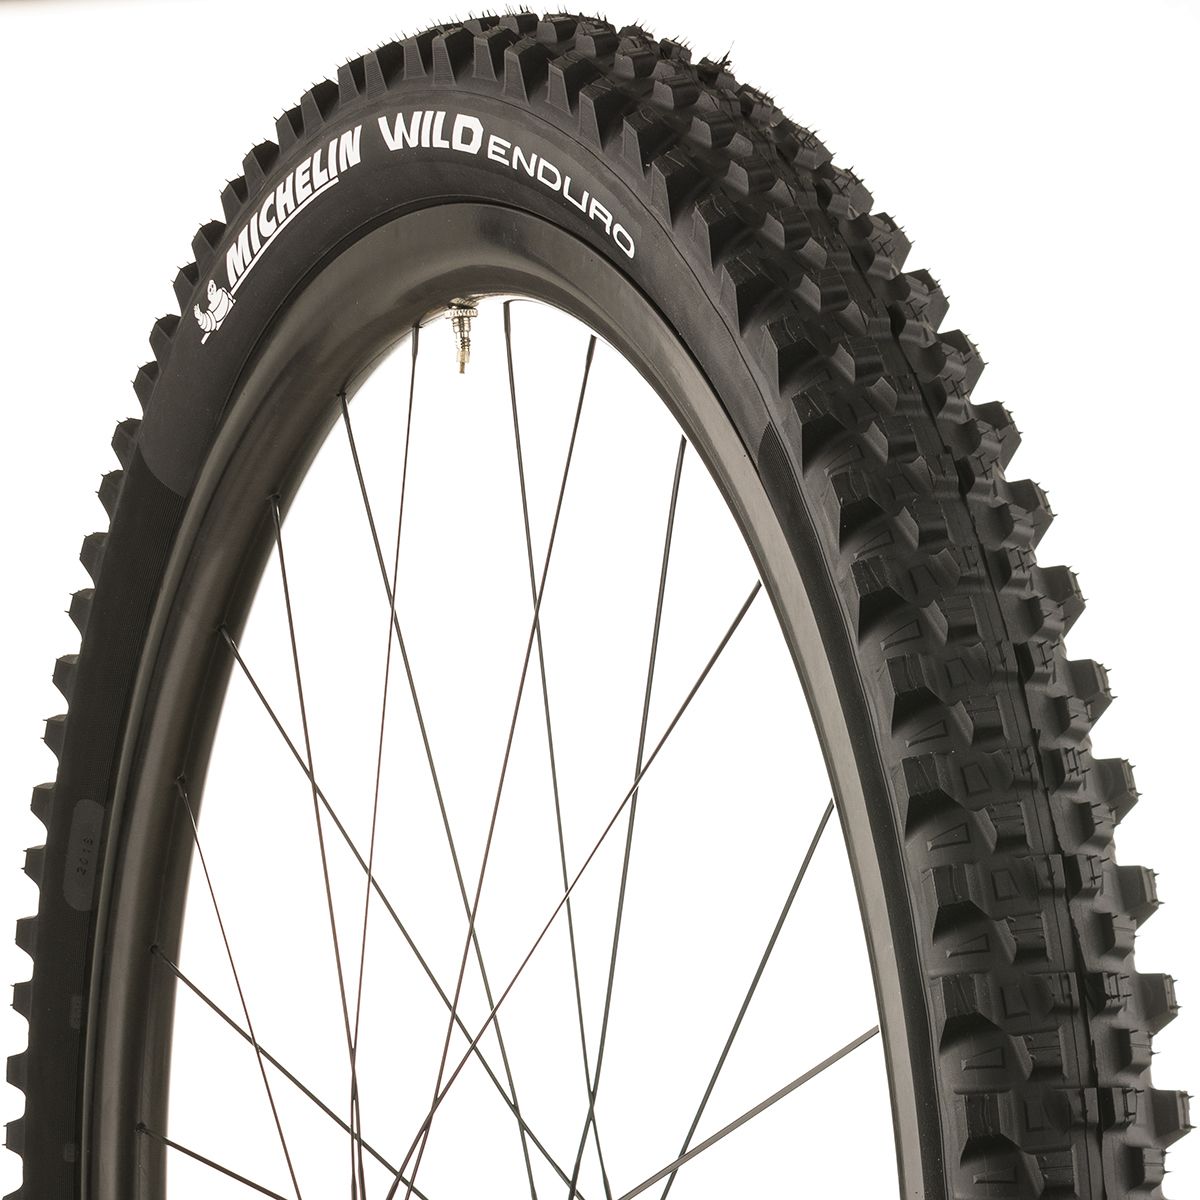 Michelin Wild Enduro 29in Tire Rear, Gum-X, 29x2.4